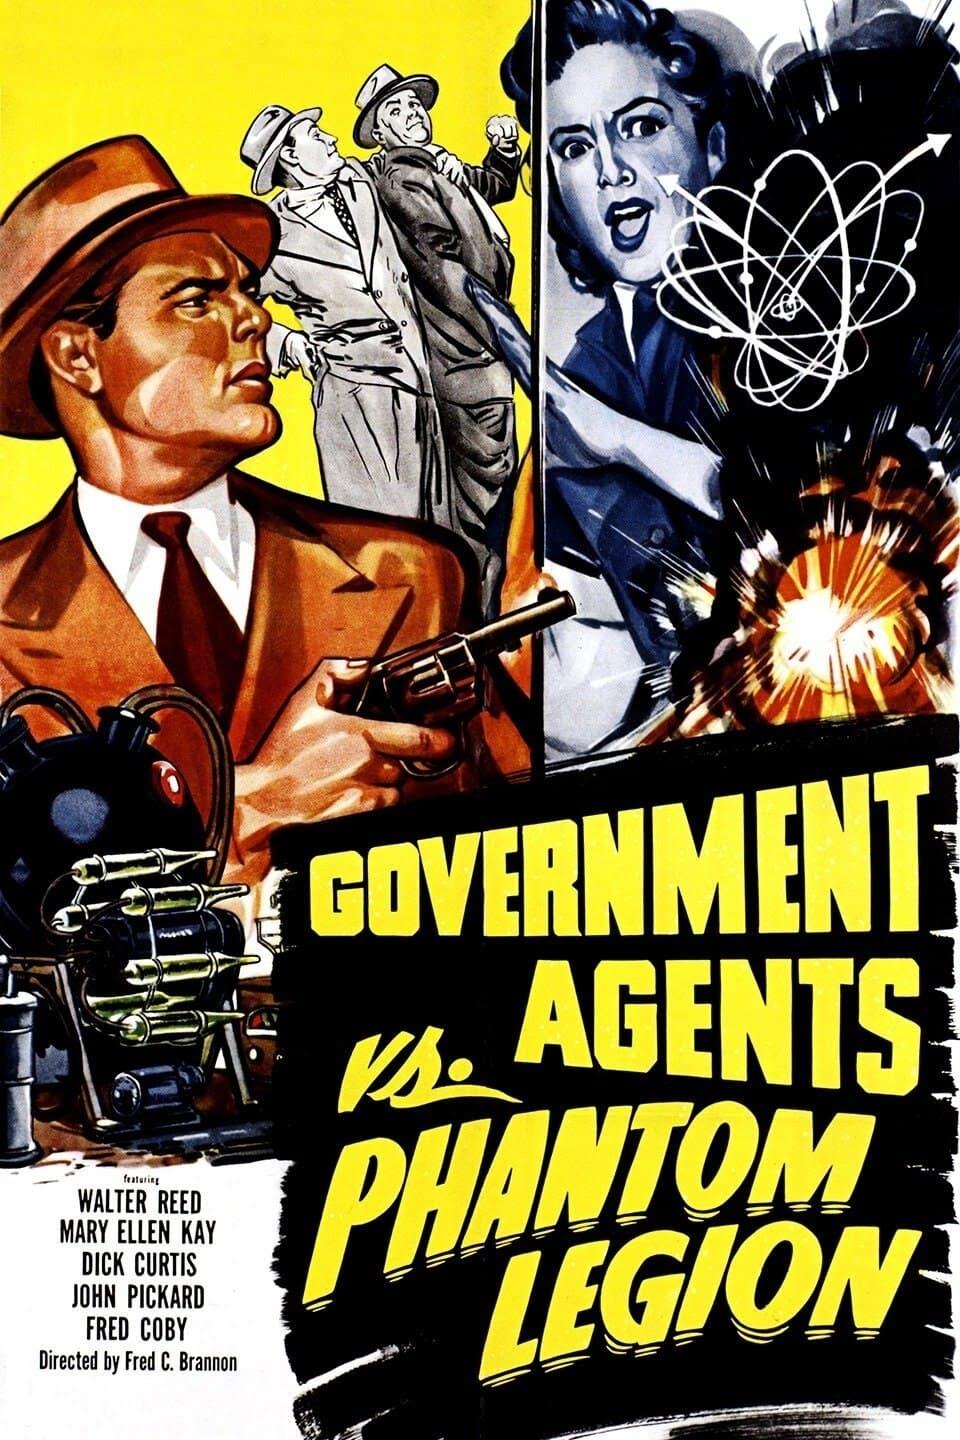 Government Agents vs Phantom Legion poster